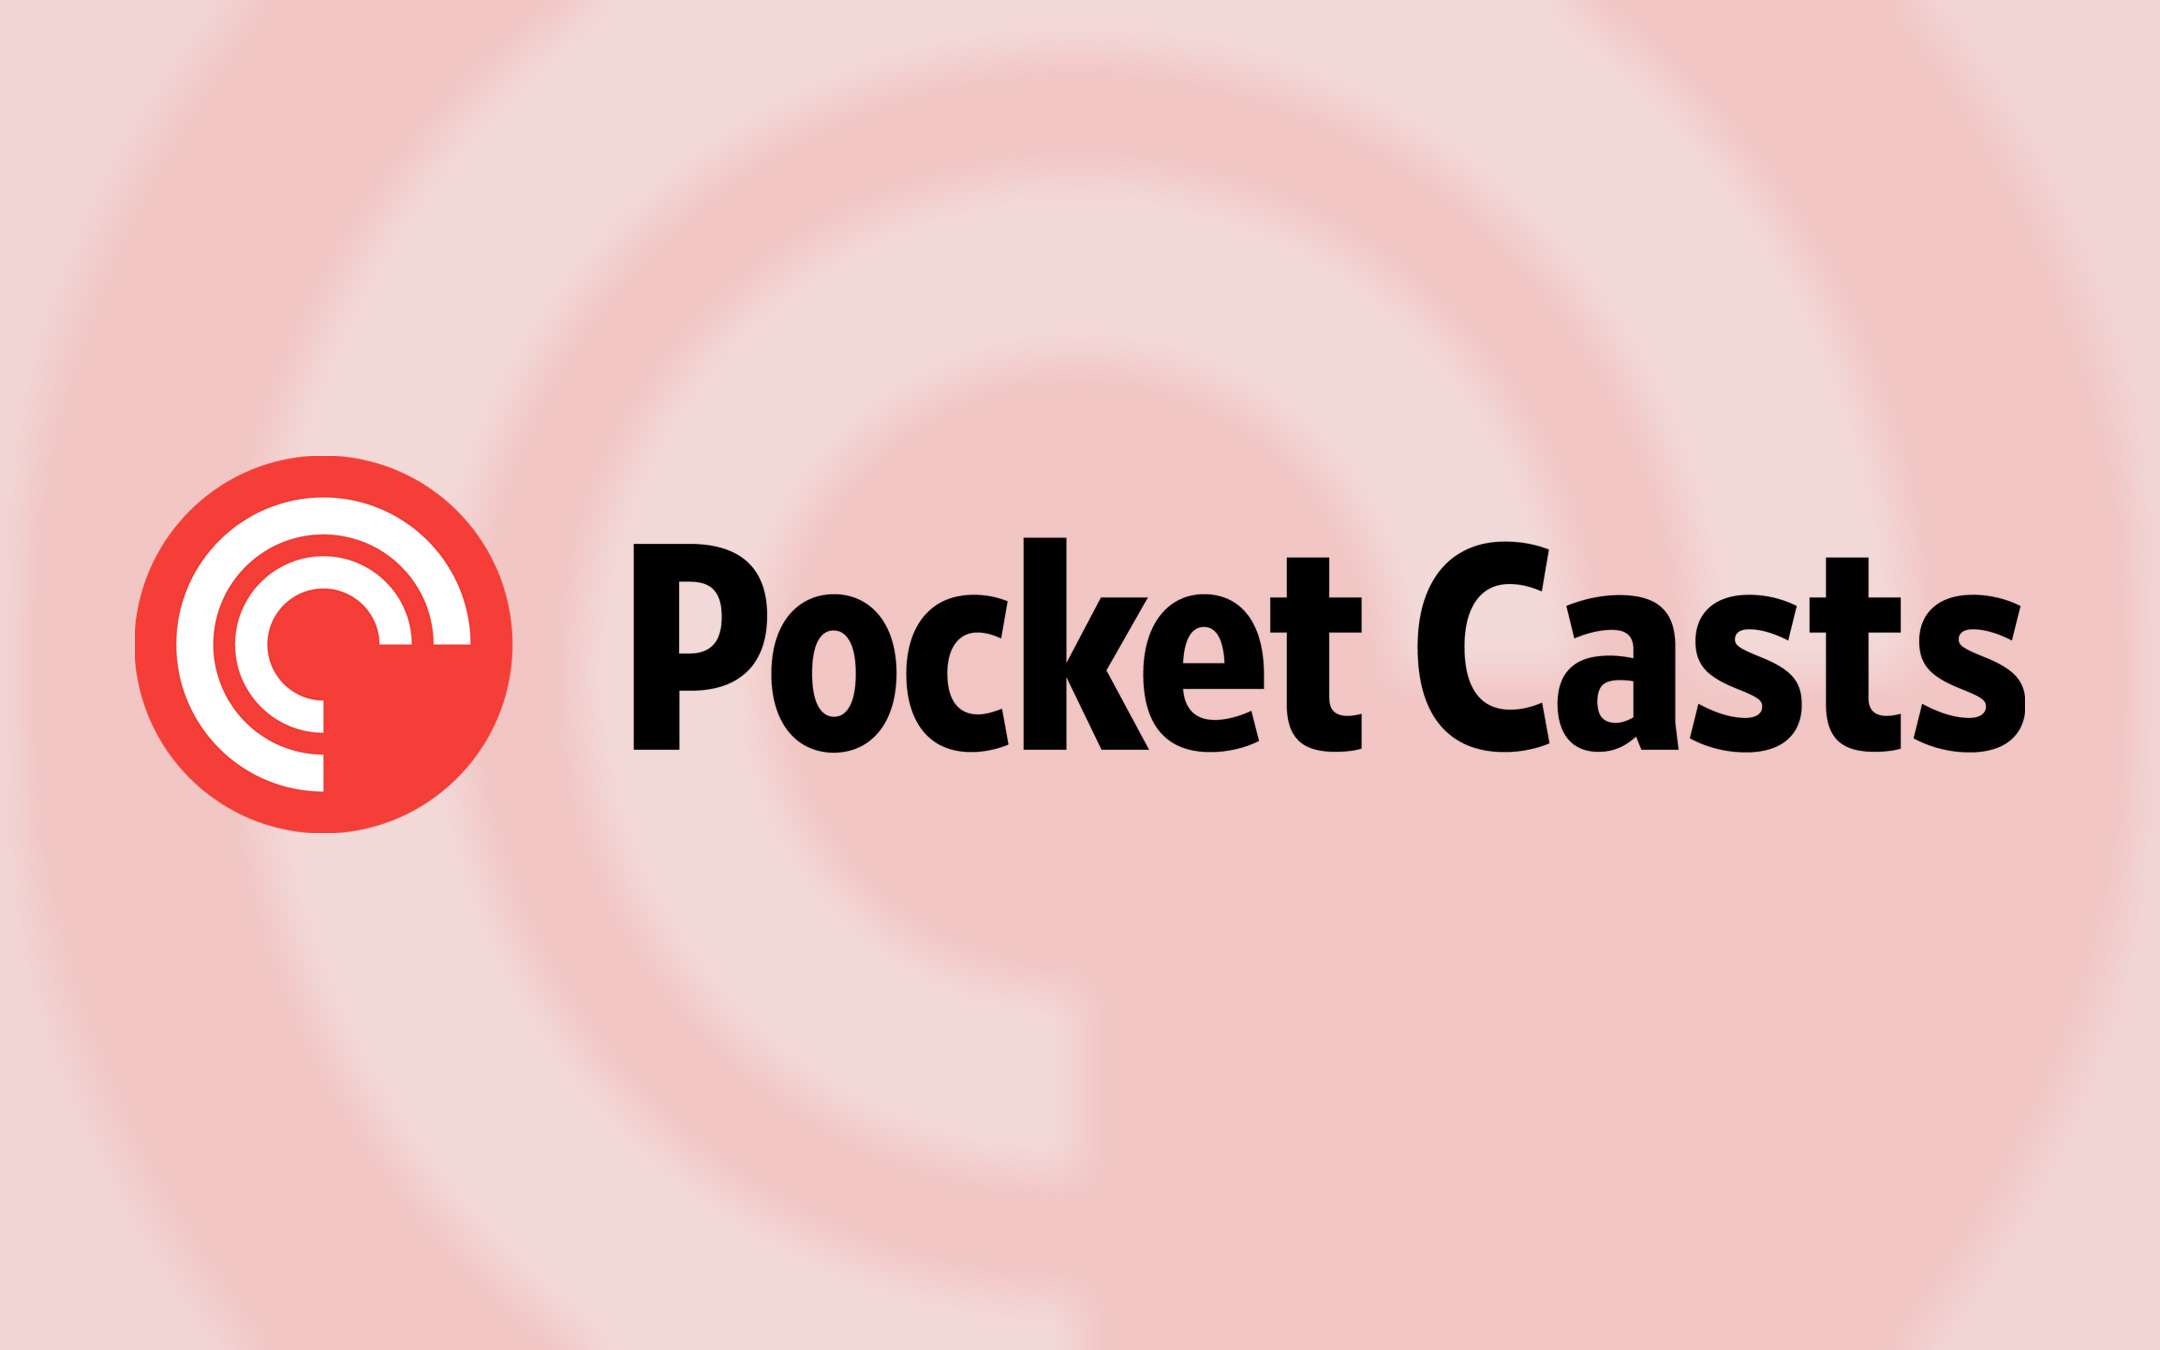 automattic owner podcast app pocket casts